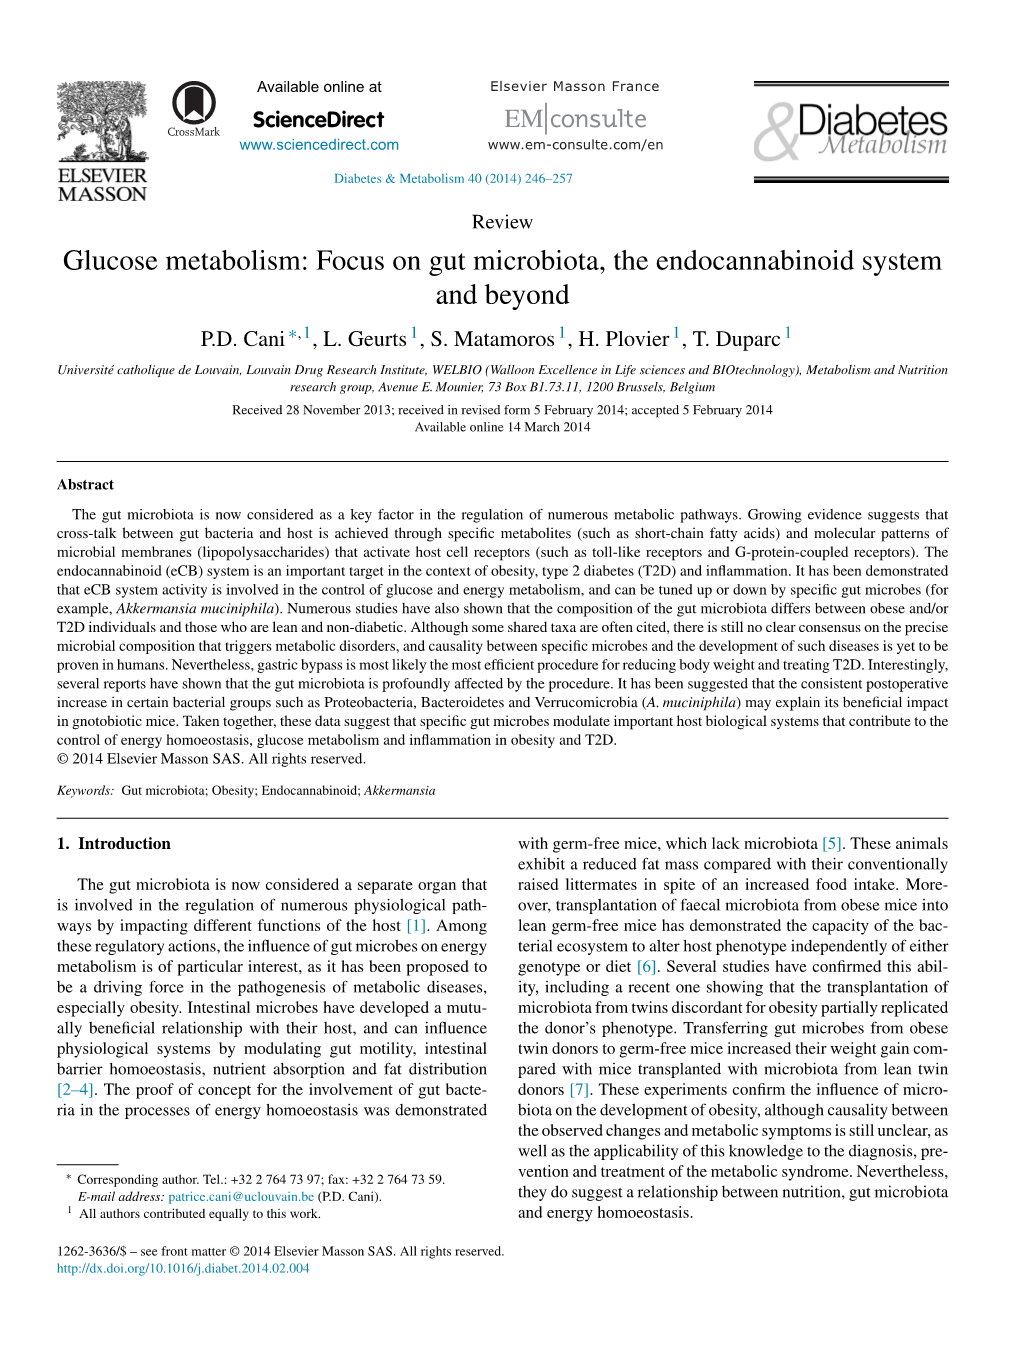 Glucose Metabolism: Focus on Gut Microbiota, the Endocannabinoid System